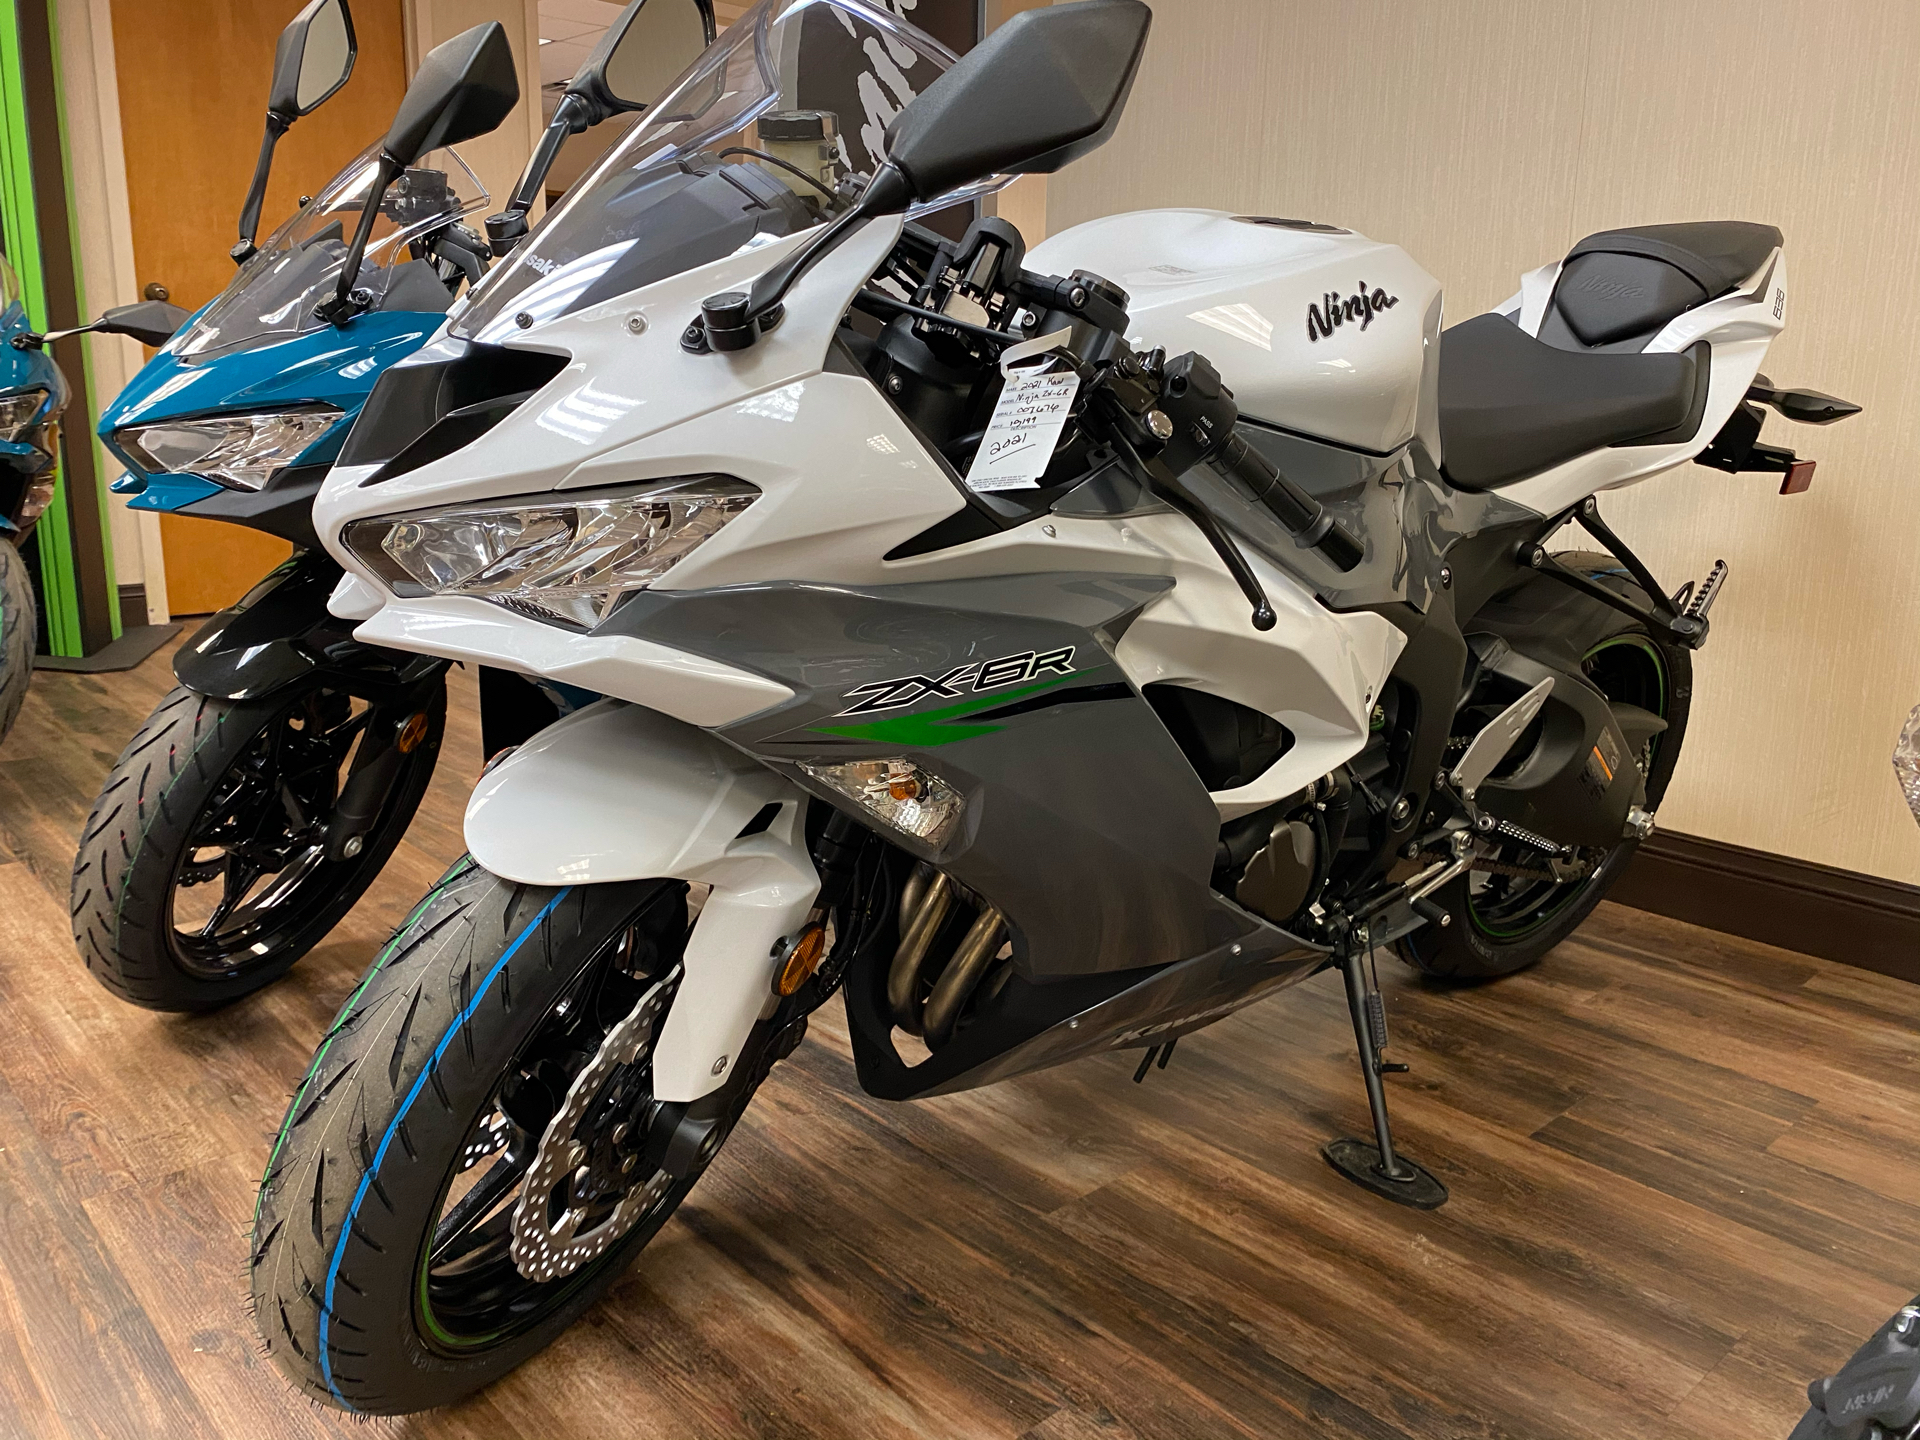 New 2021 Kawasaki Ninja ZX-6R Motorcycles in Statesville, NC | Number: 007676